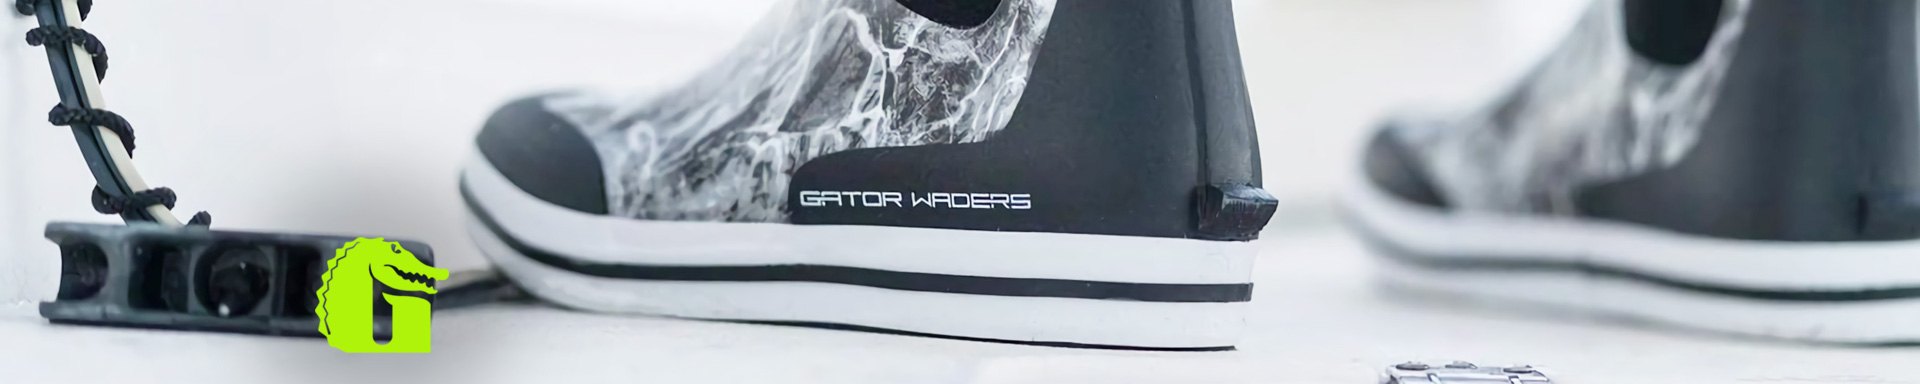 Gator Waders